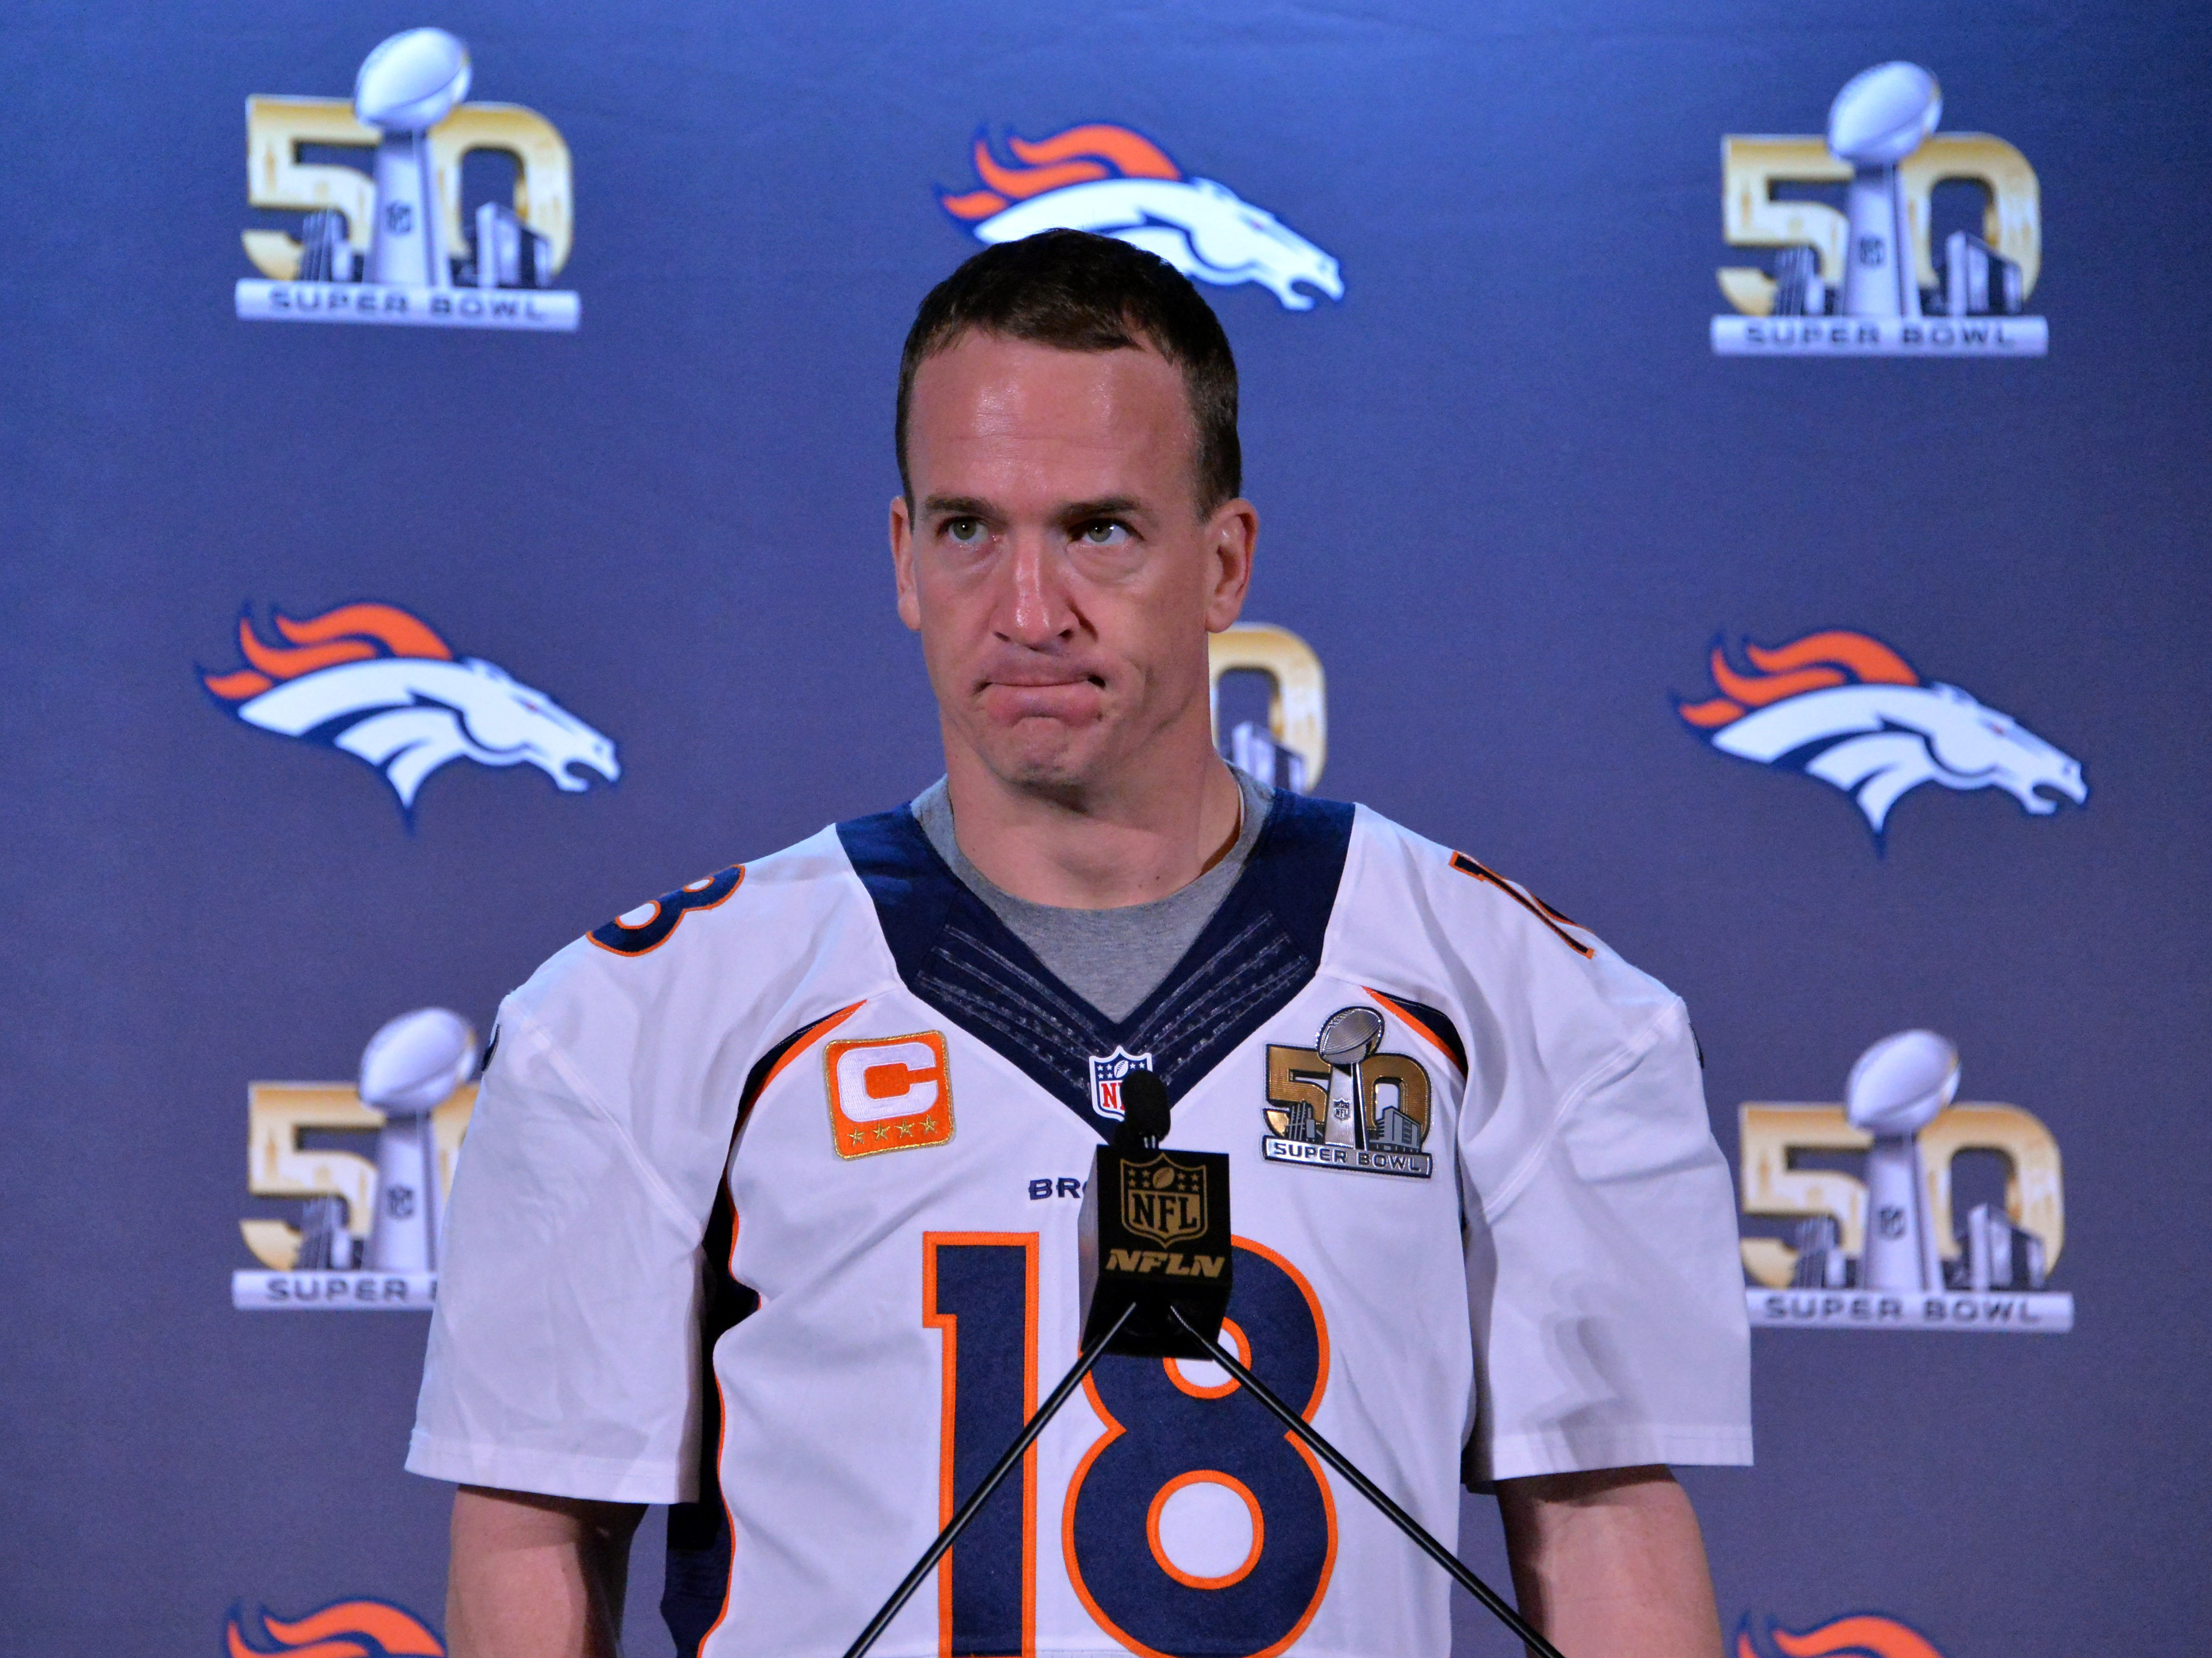 Denver Broncos' Peyton Manning: I am focused on the game